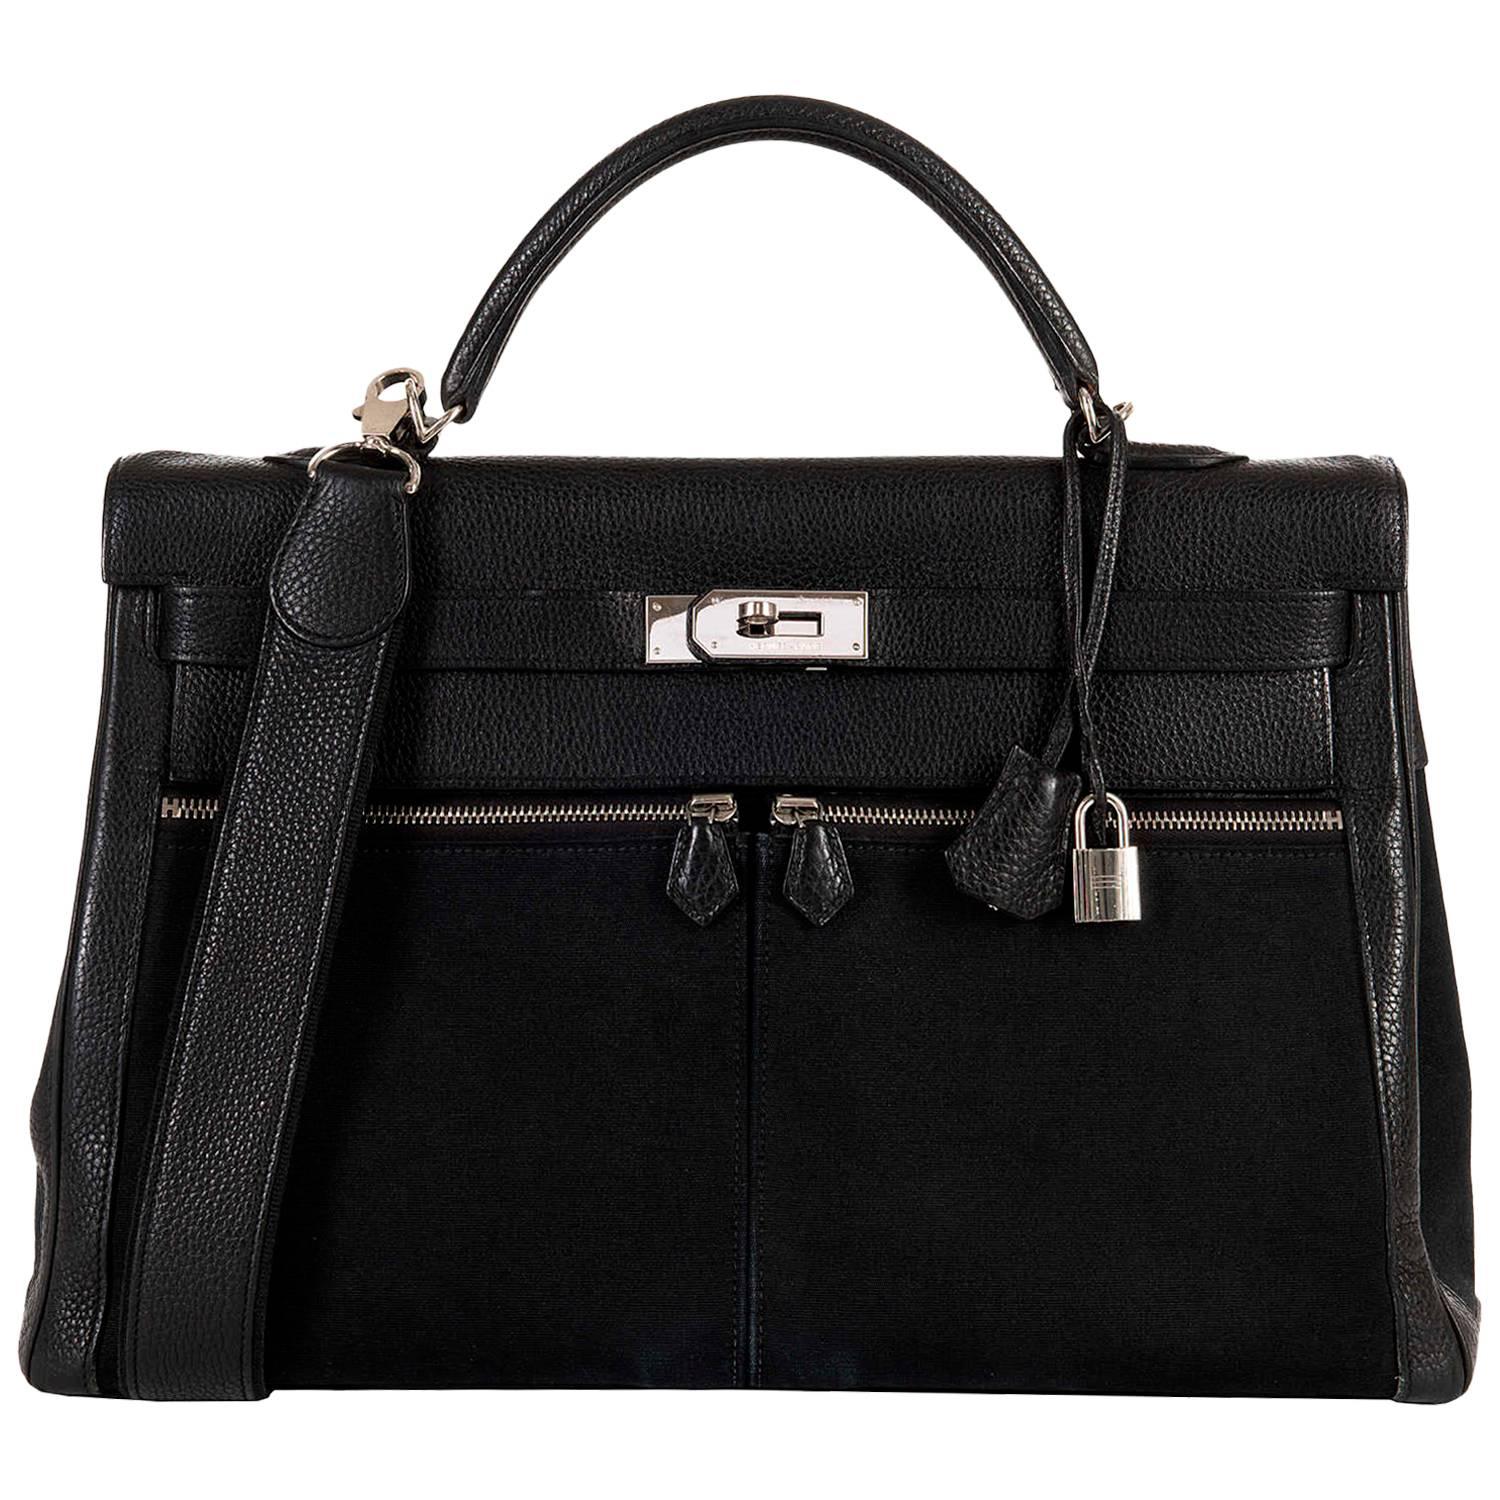 So So Rare Hermes 40cm Black on Black kelly 'Lakis' Bag with Palladium Hardware For Sale